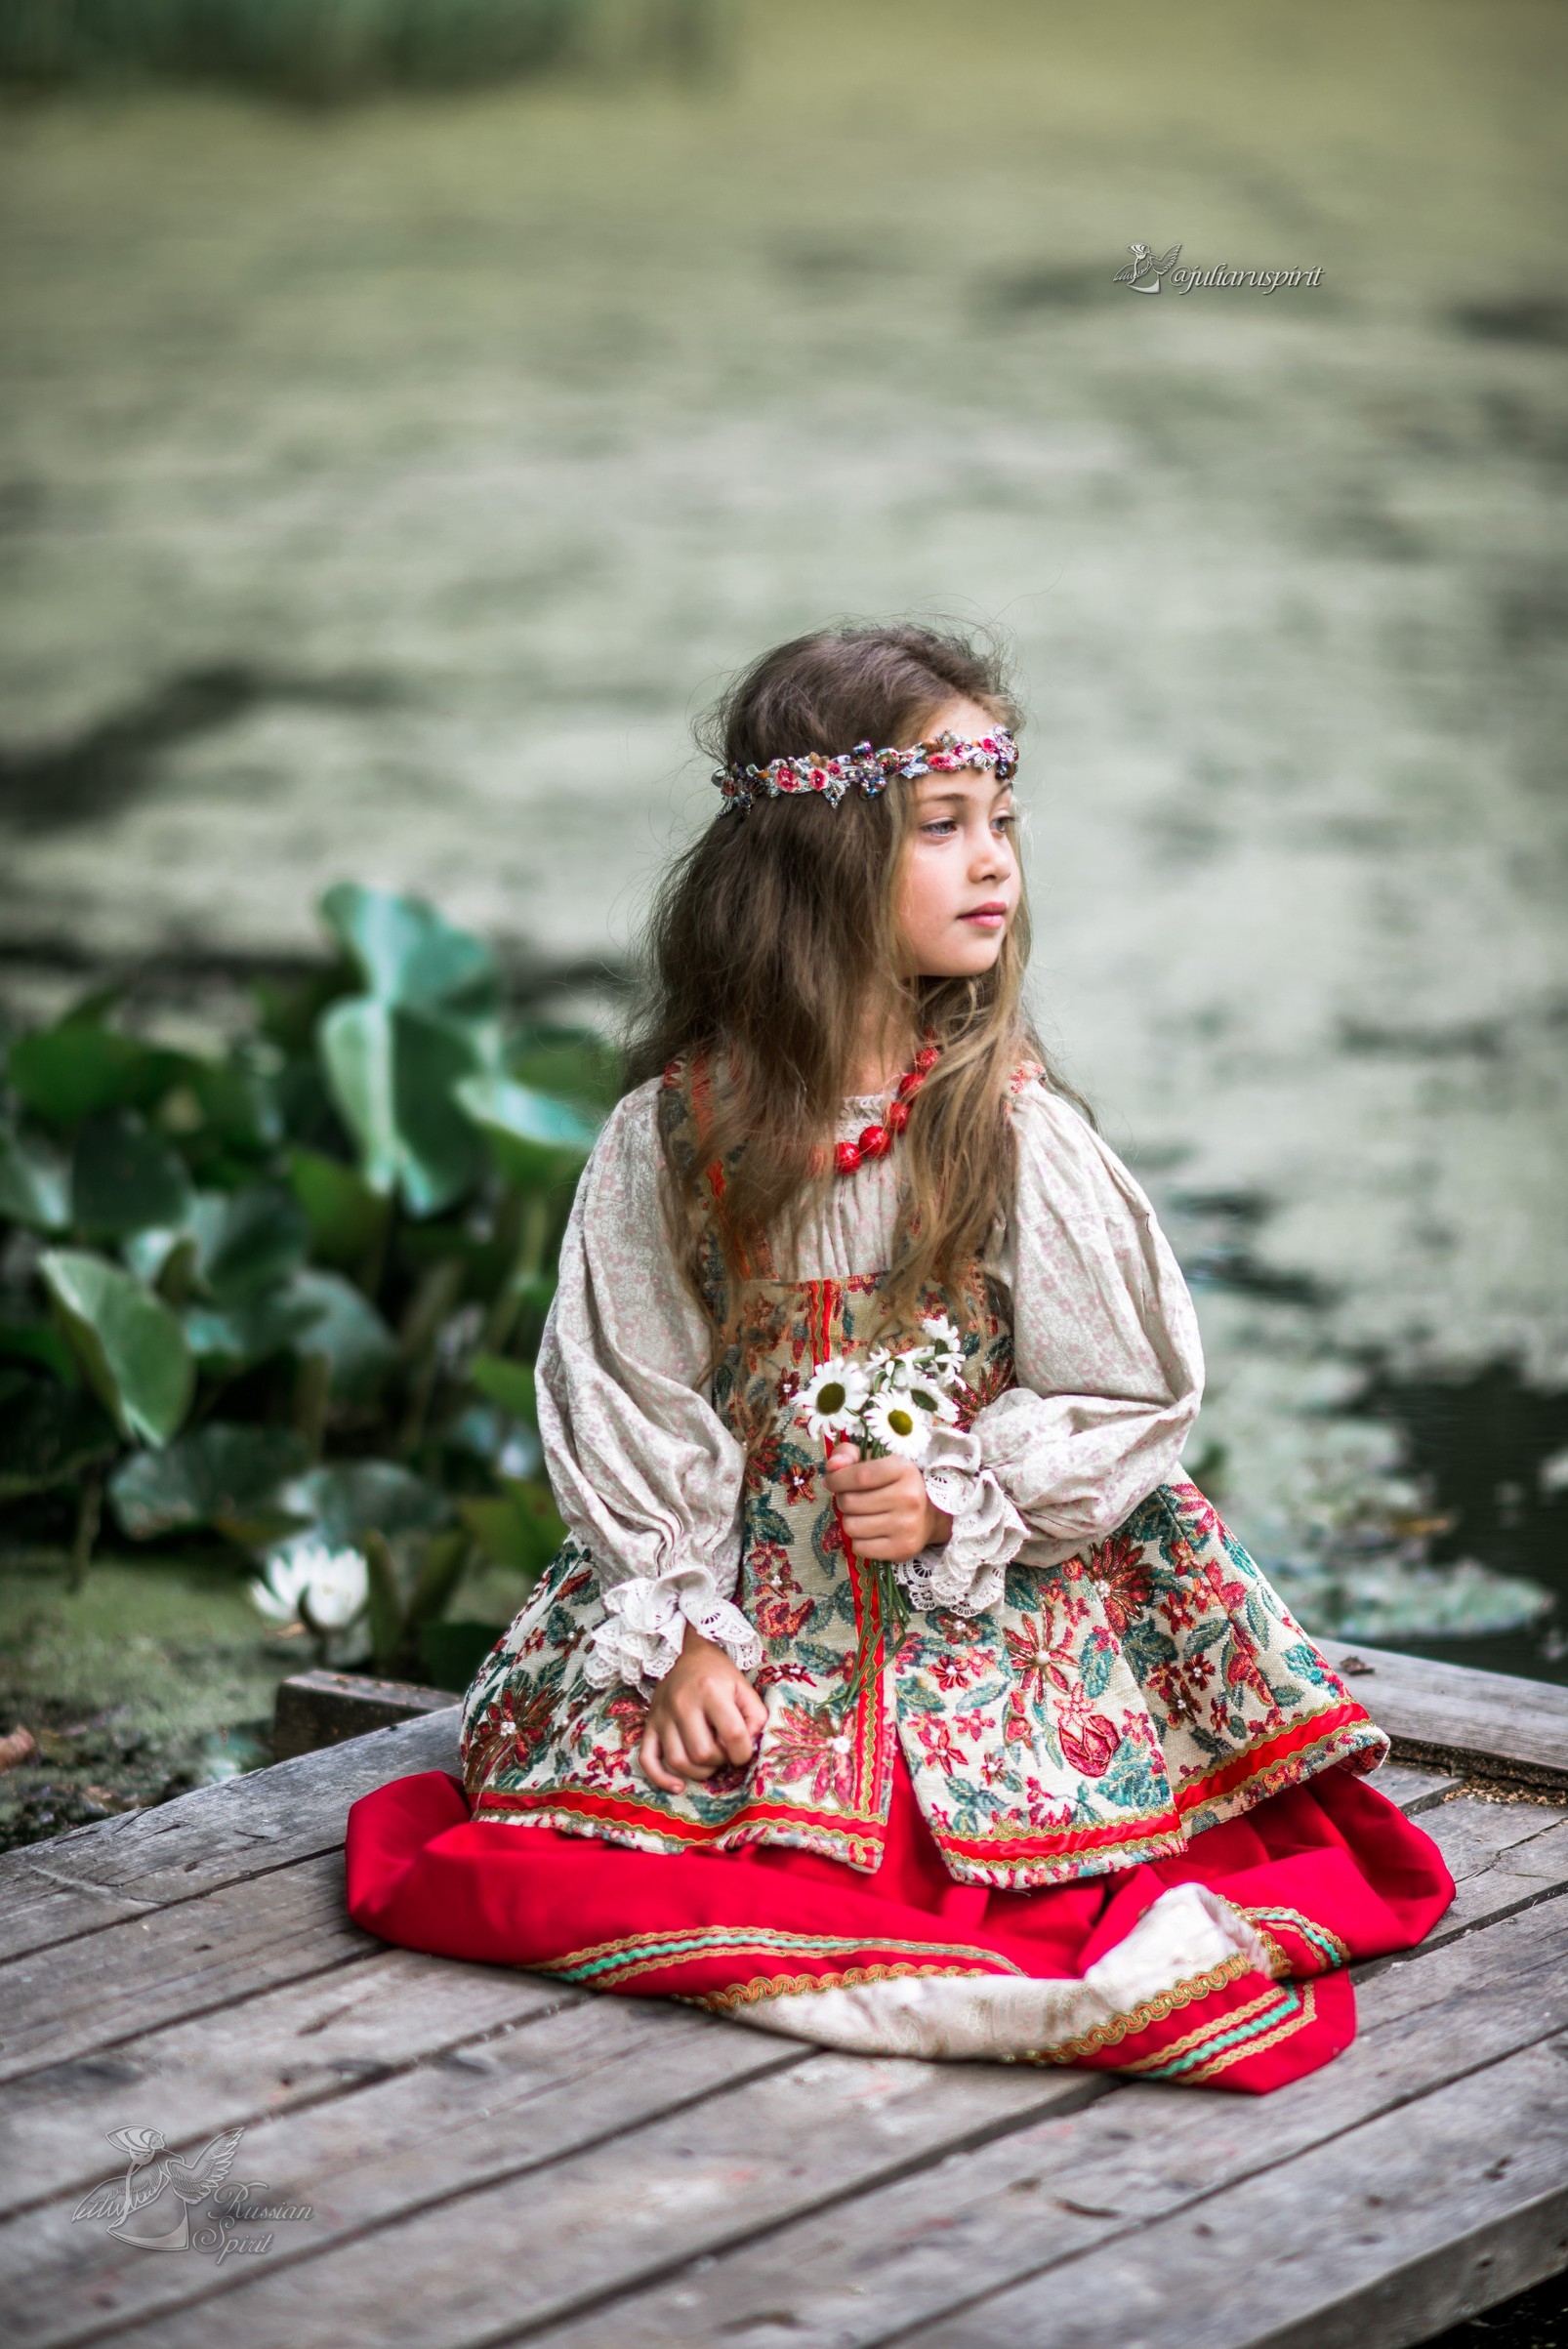 Девочка на мостике у пруда в национальном русском платье